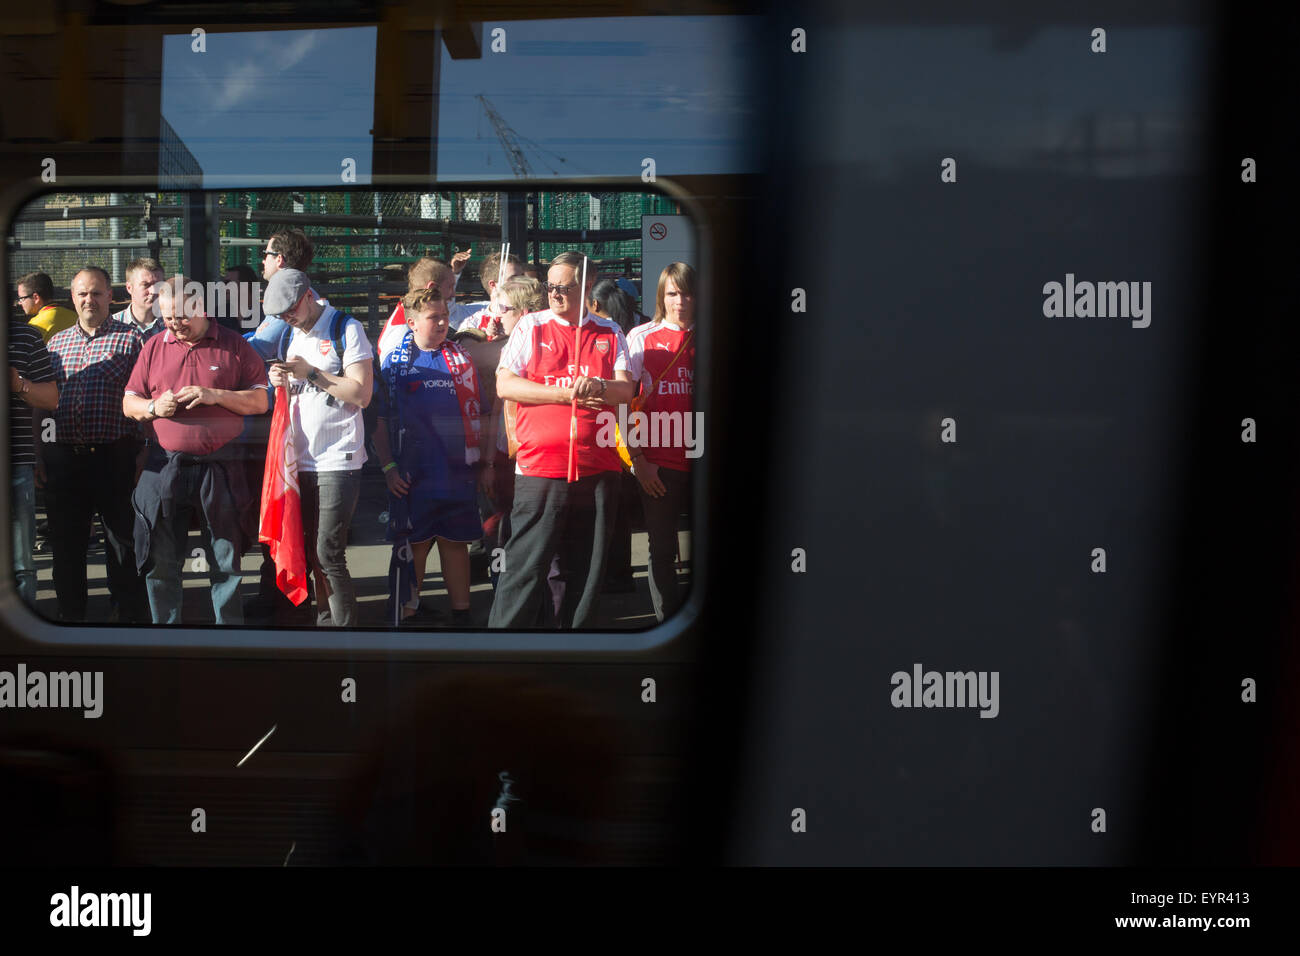 Football supporters on a train platform waiting, seen through a train window Stock Photo